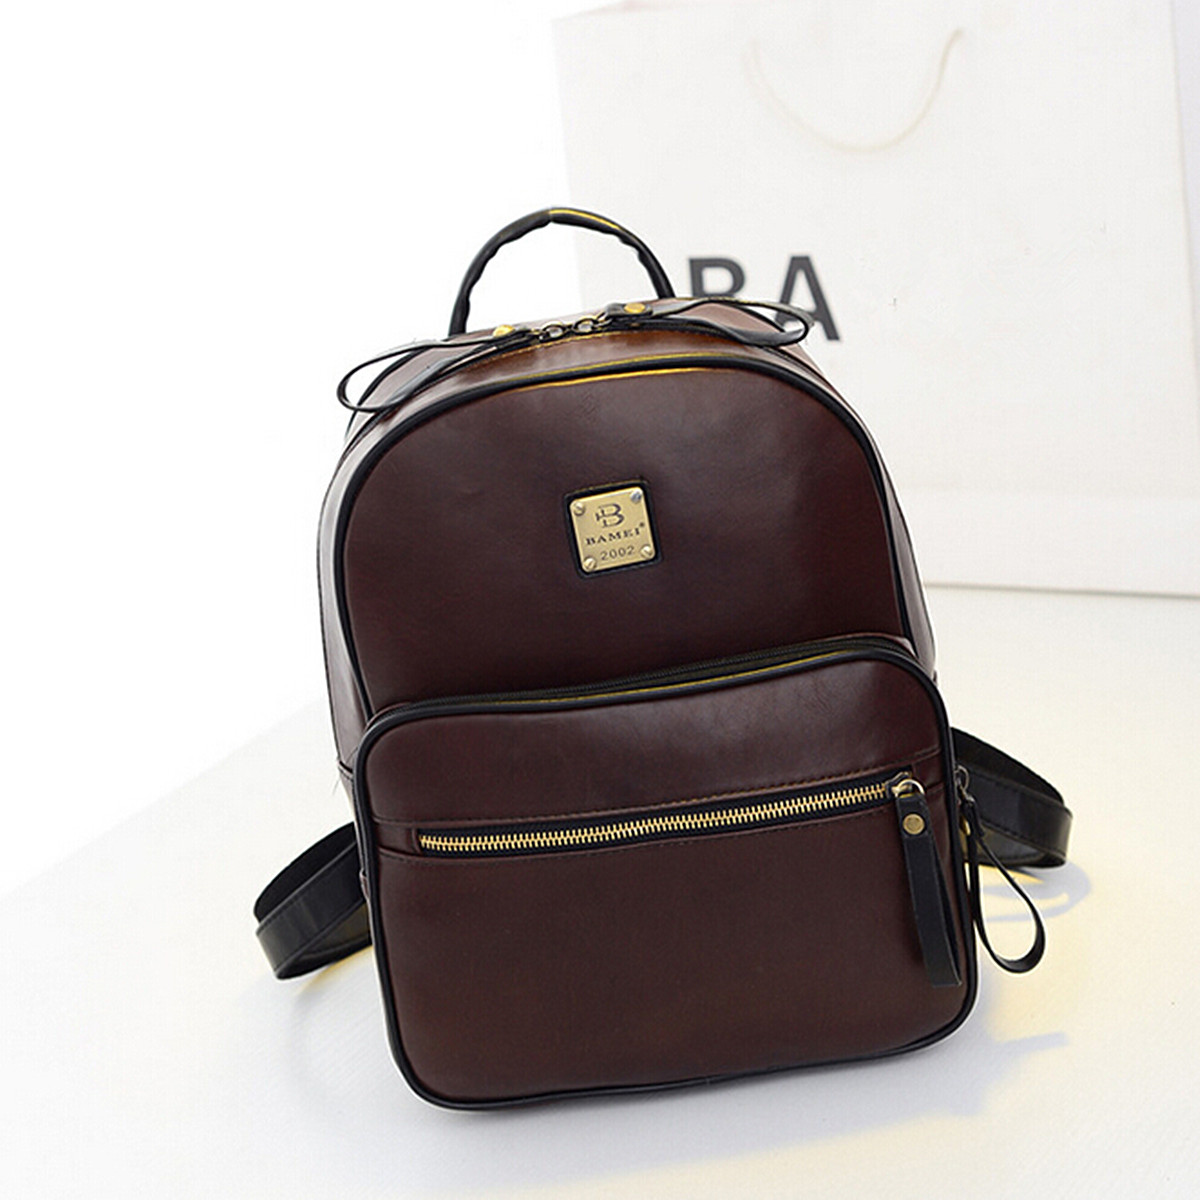 NEW Fashion Women Leather Backpack School Bags Satchel Rucksack Lady Handbag UK | eBay